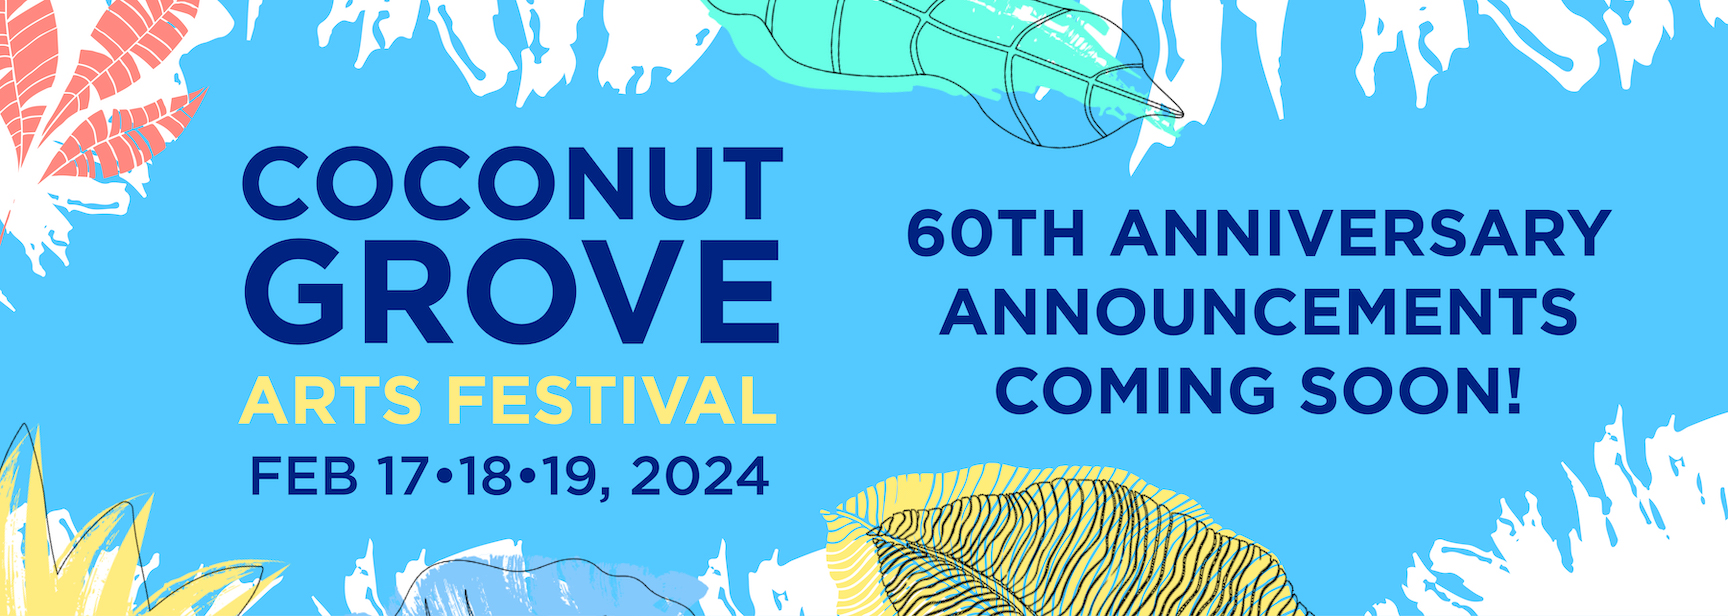 Coconut Grove Art Festival 2024